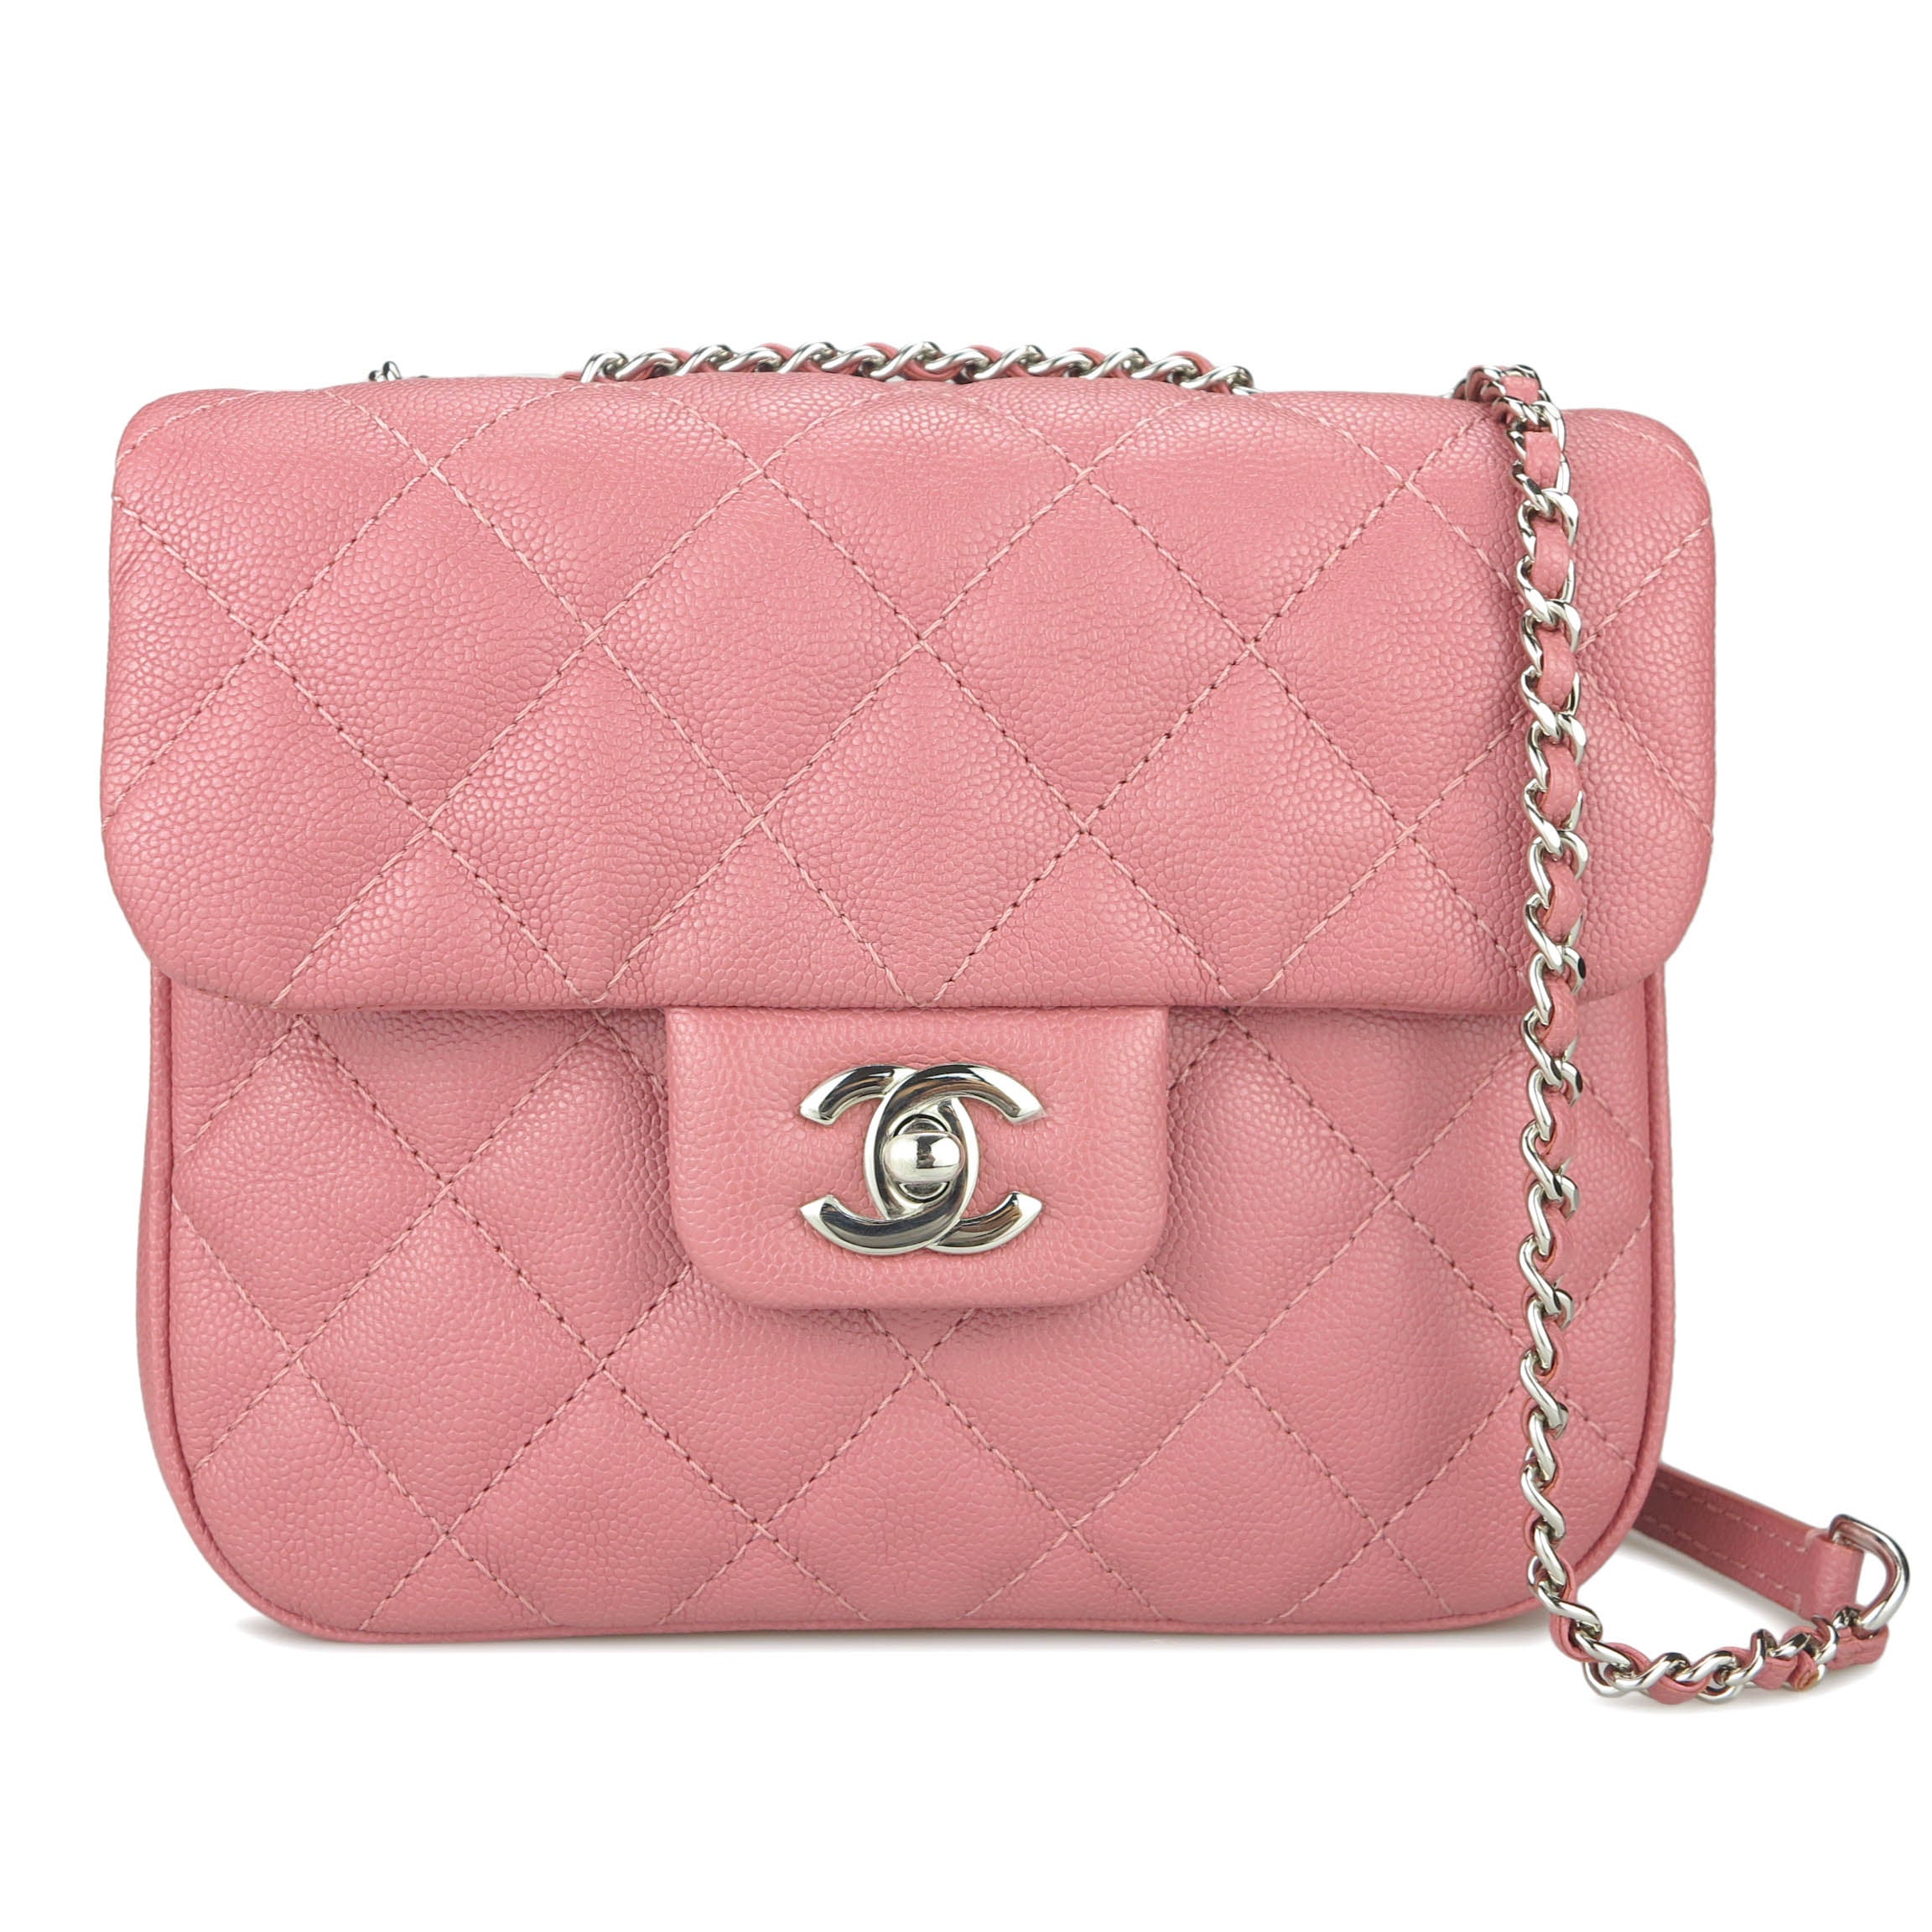 Small Urban Companion Flap Bag in Mauve Pink Caviar